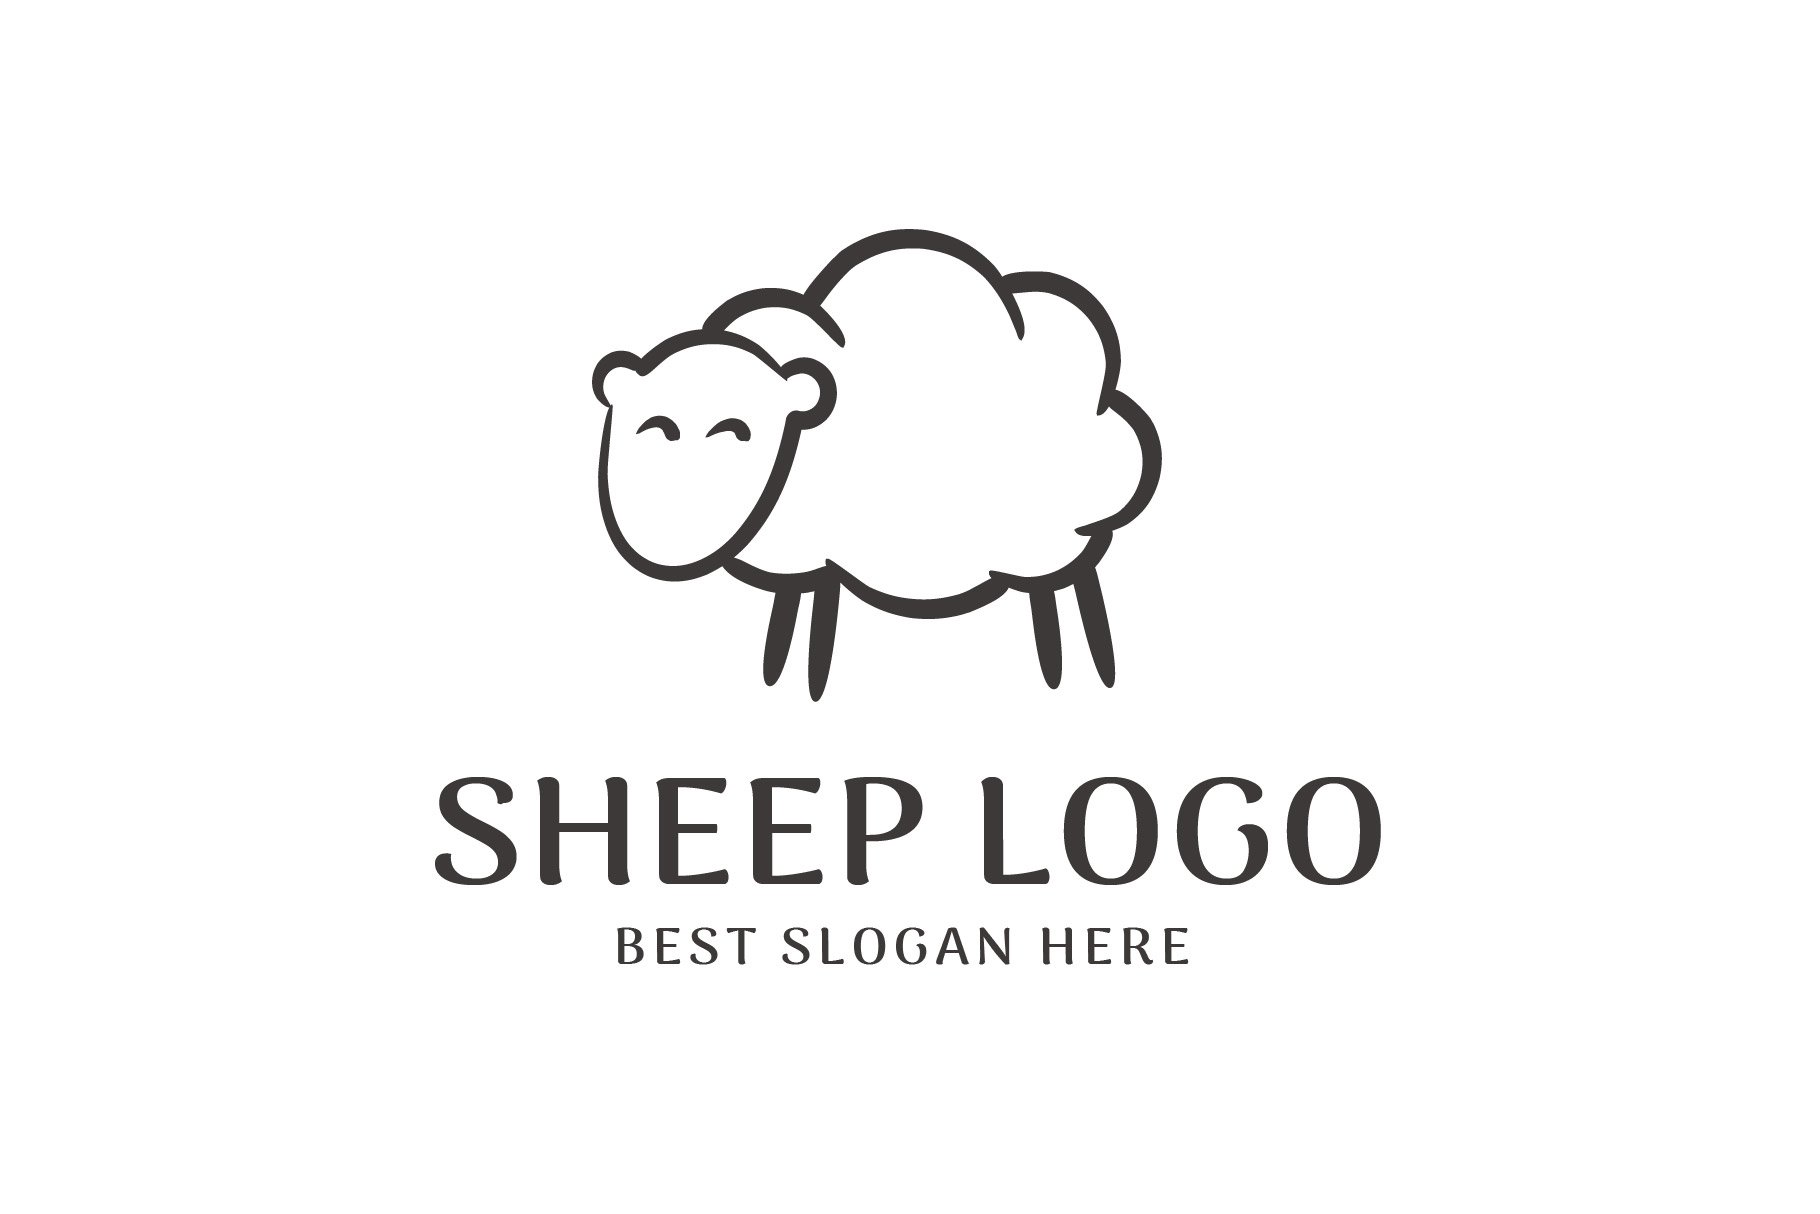 Minimal sheep logo cover image.